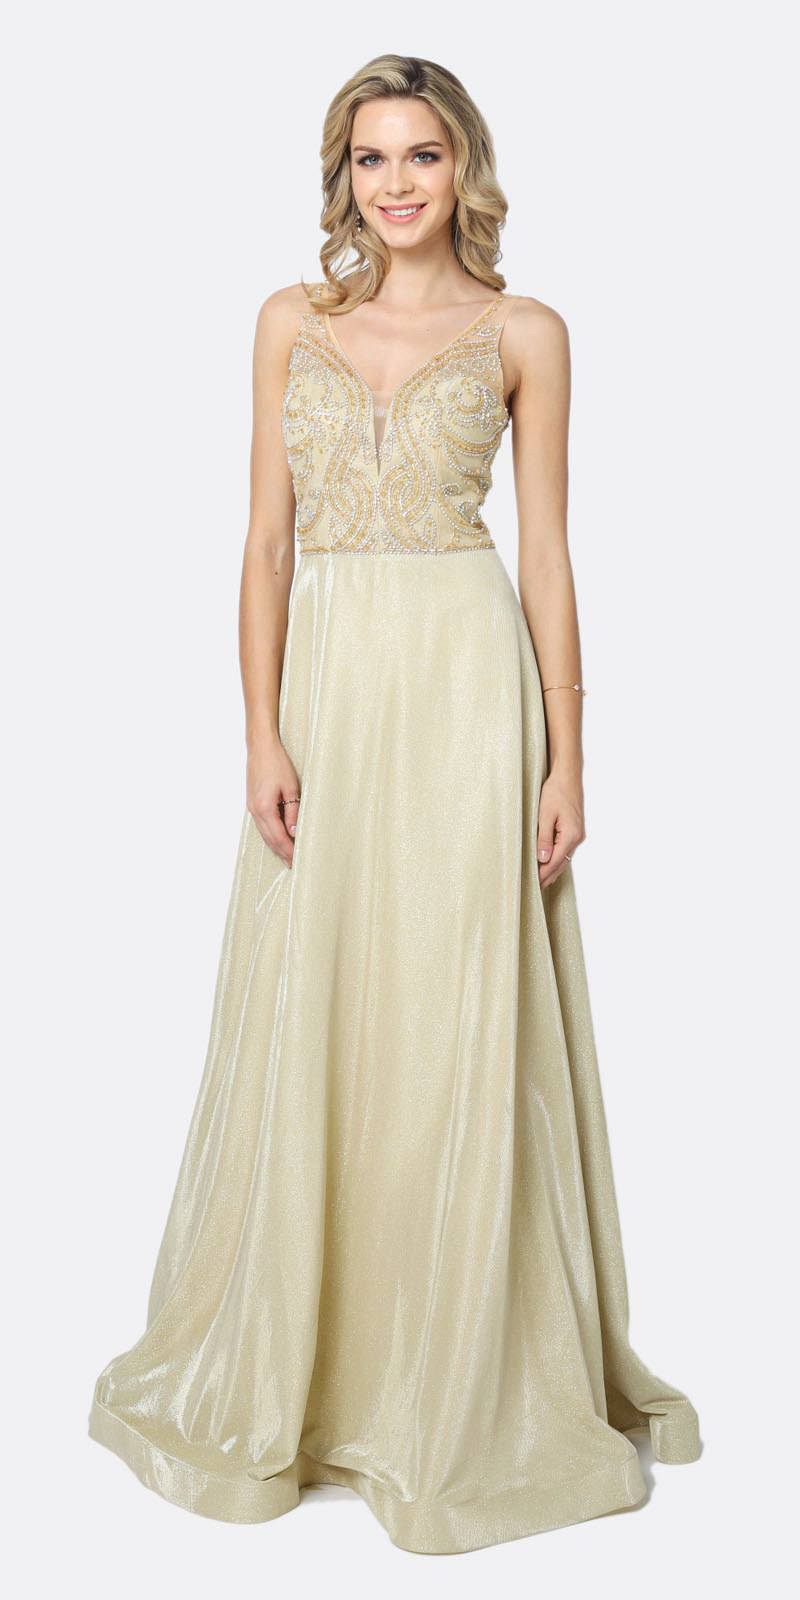 Juliet 699 Metallic Glitter Gold Prom Dress Embellished Bodice V-Neck Sleeveless